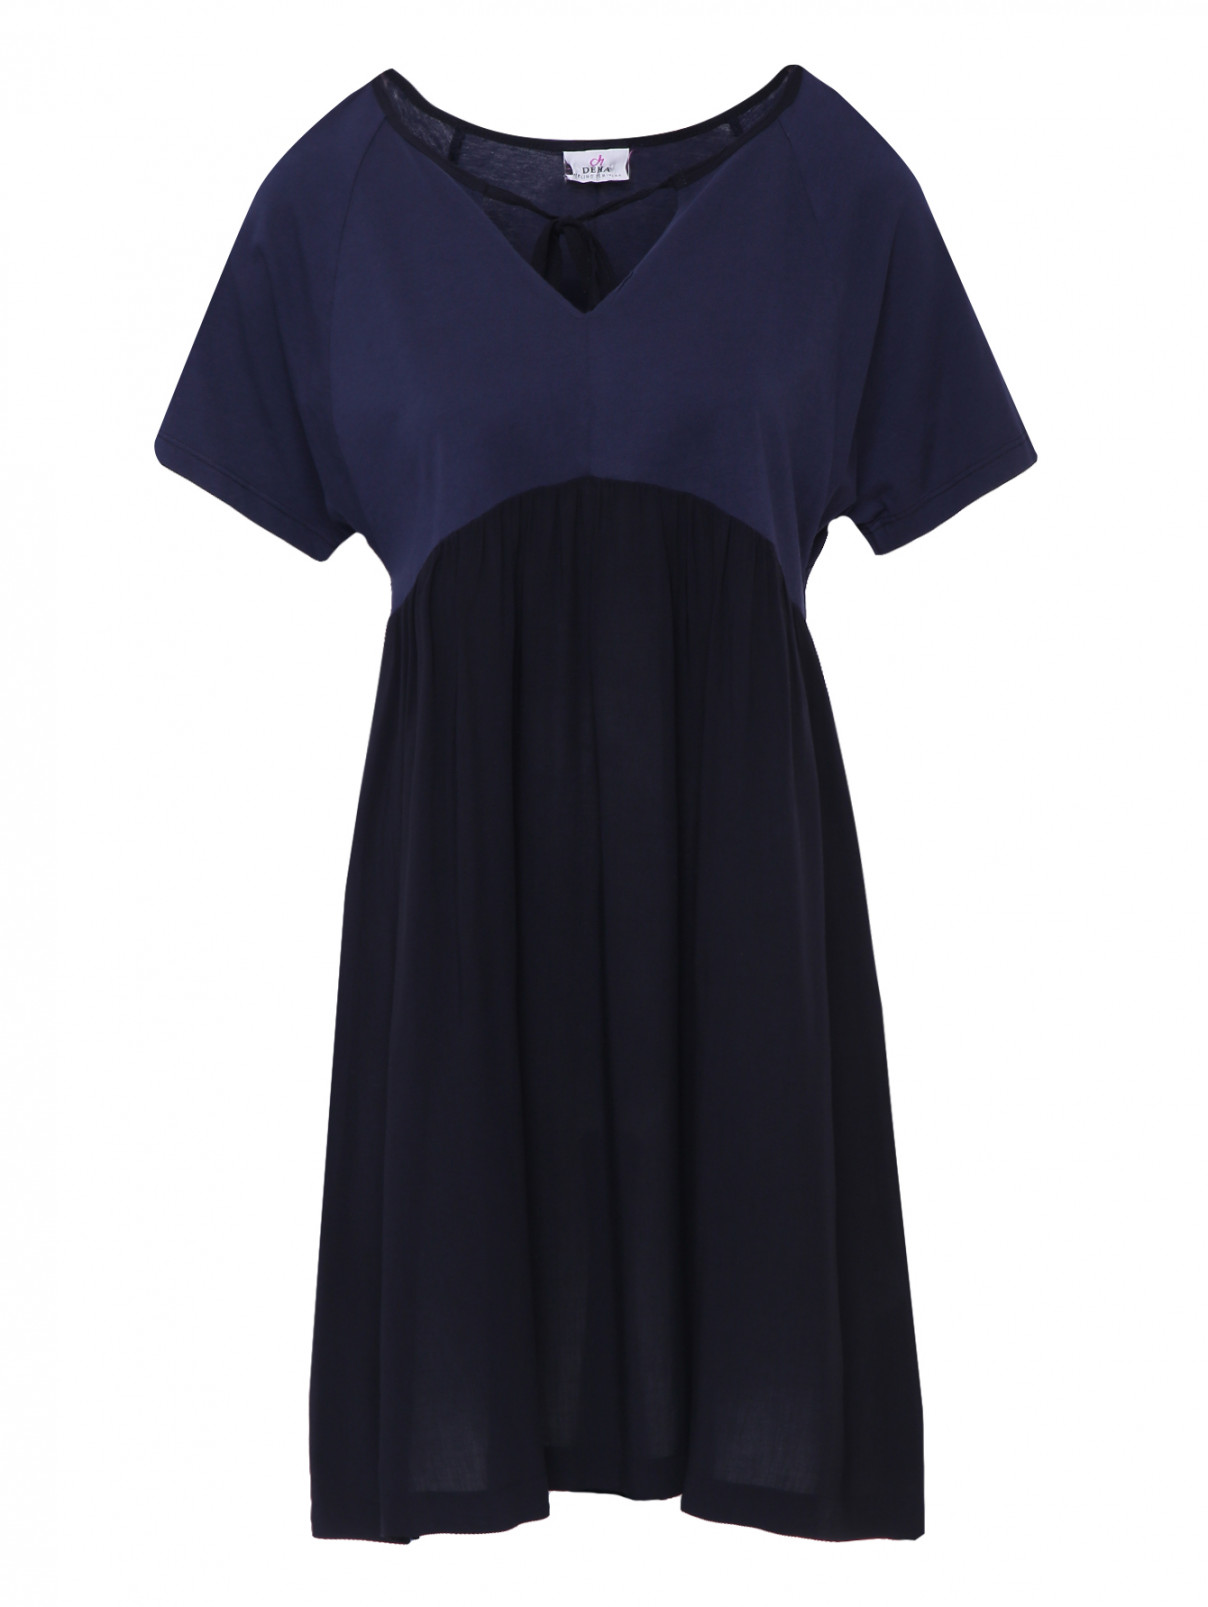 Платье из трикотажа с коротким рукавом DEHA  –  Общий вид  – Цвет:  Синий